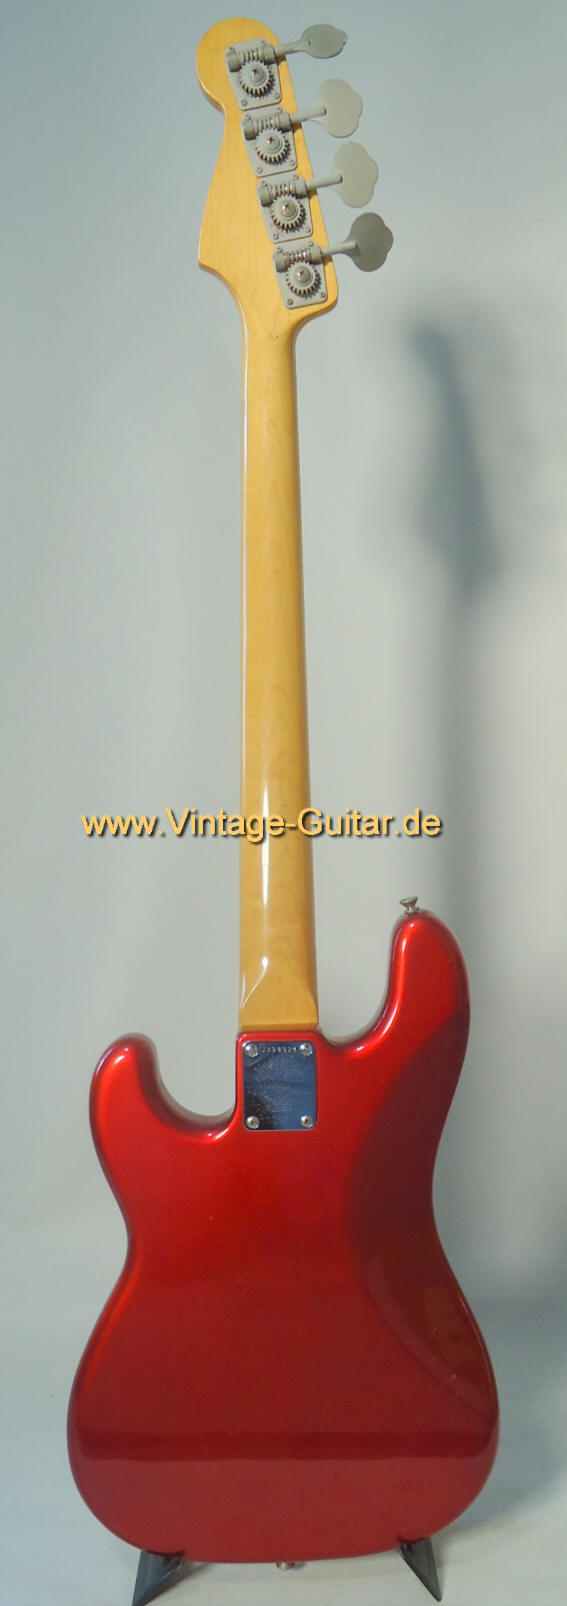 Fender Precision Bass  JV medium scale-c.jpg